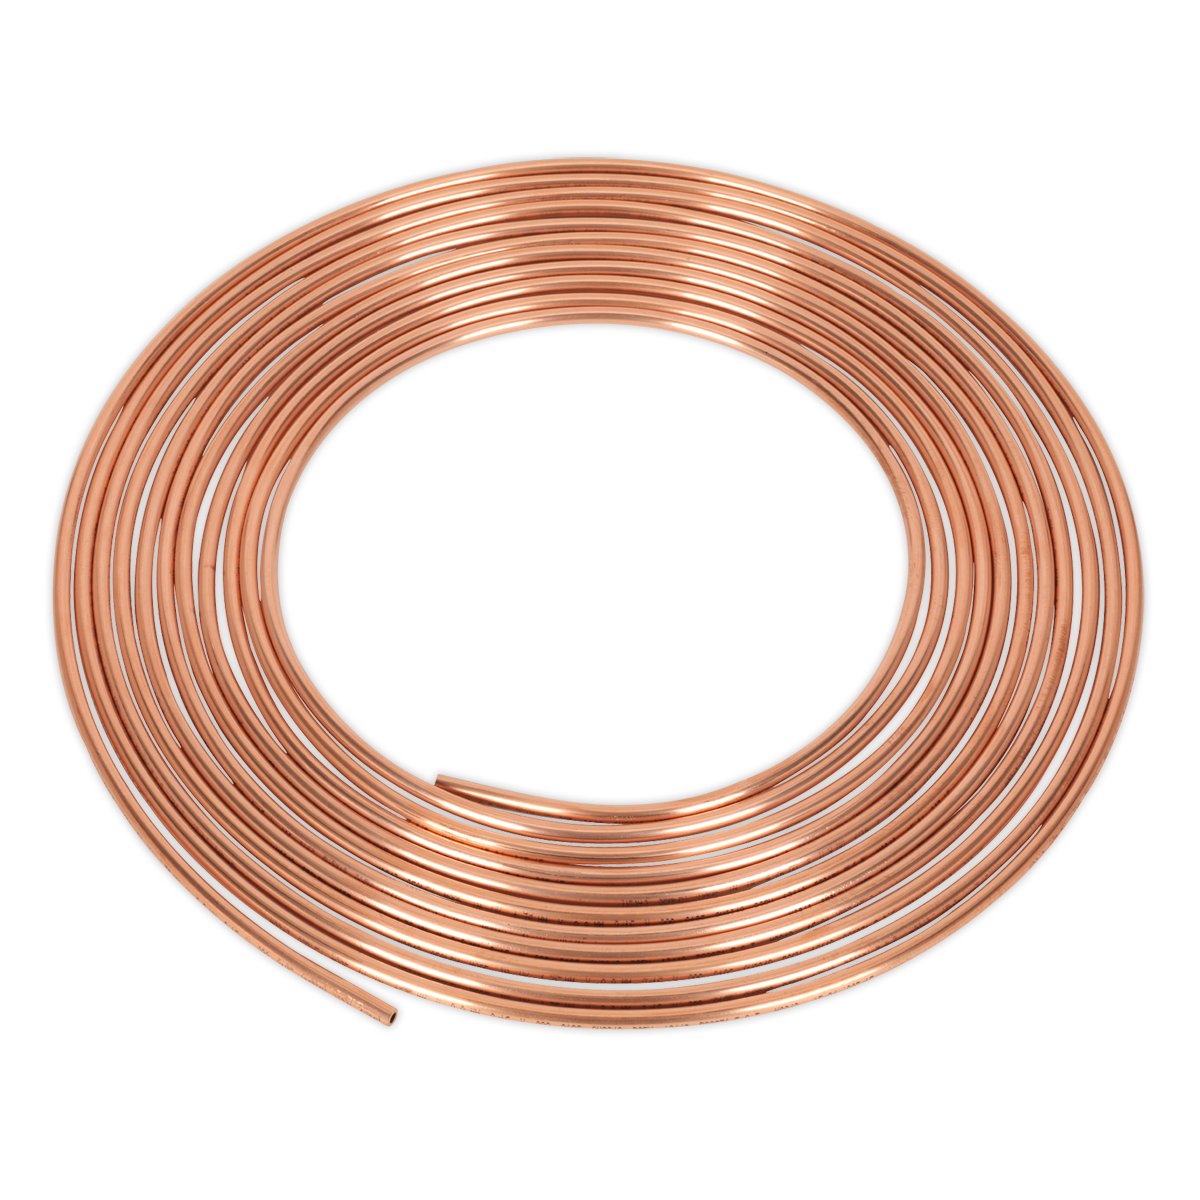 Brake Pipe Copper Tubing 20 Gauge 3/16" x 25ft - CBP001 - Farming Parts